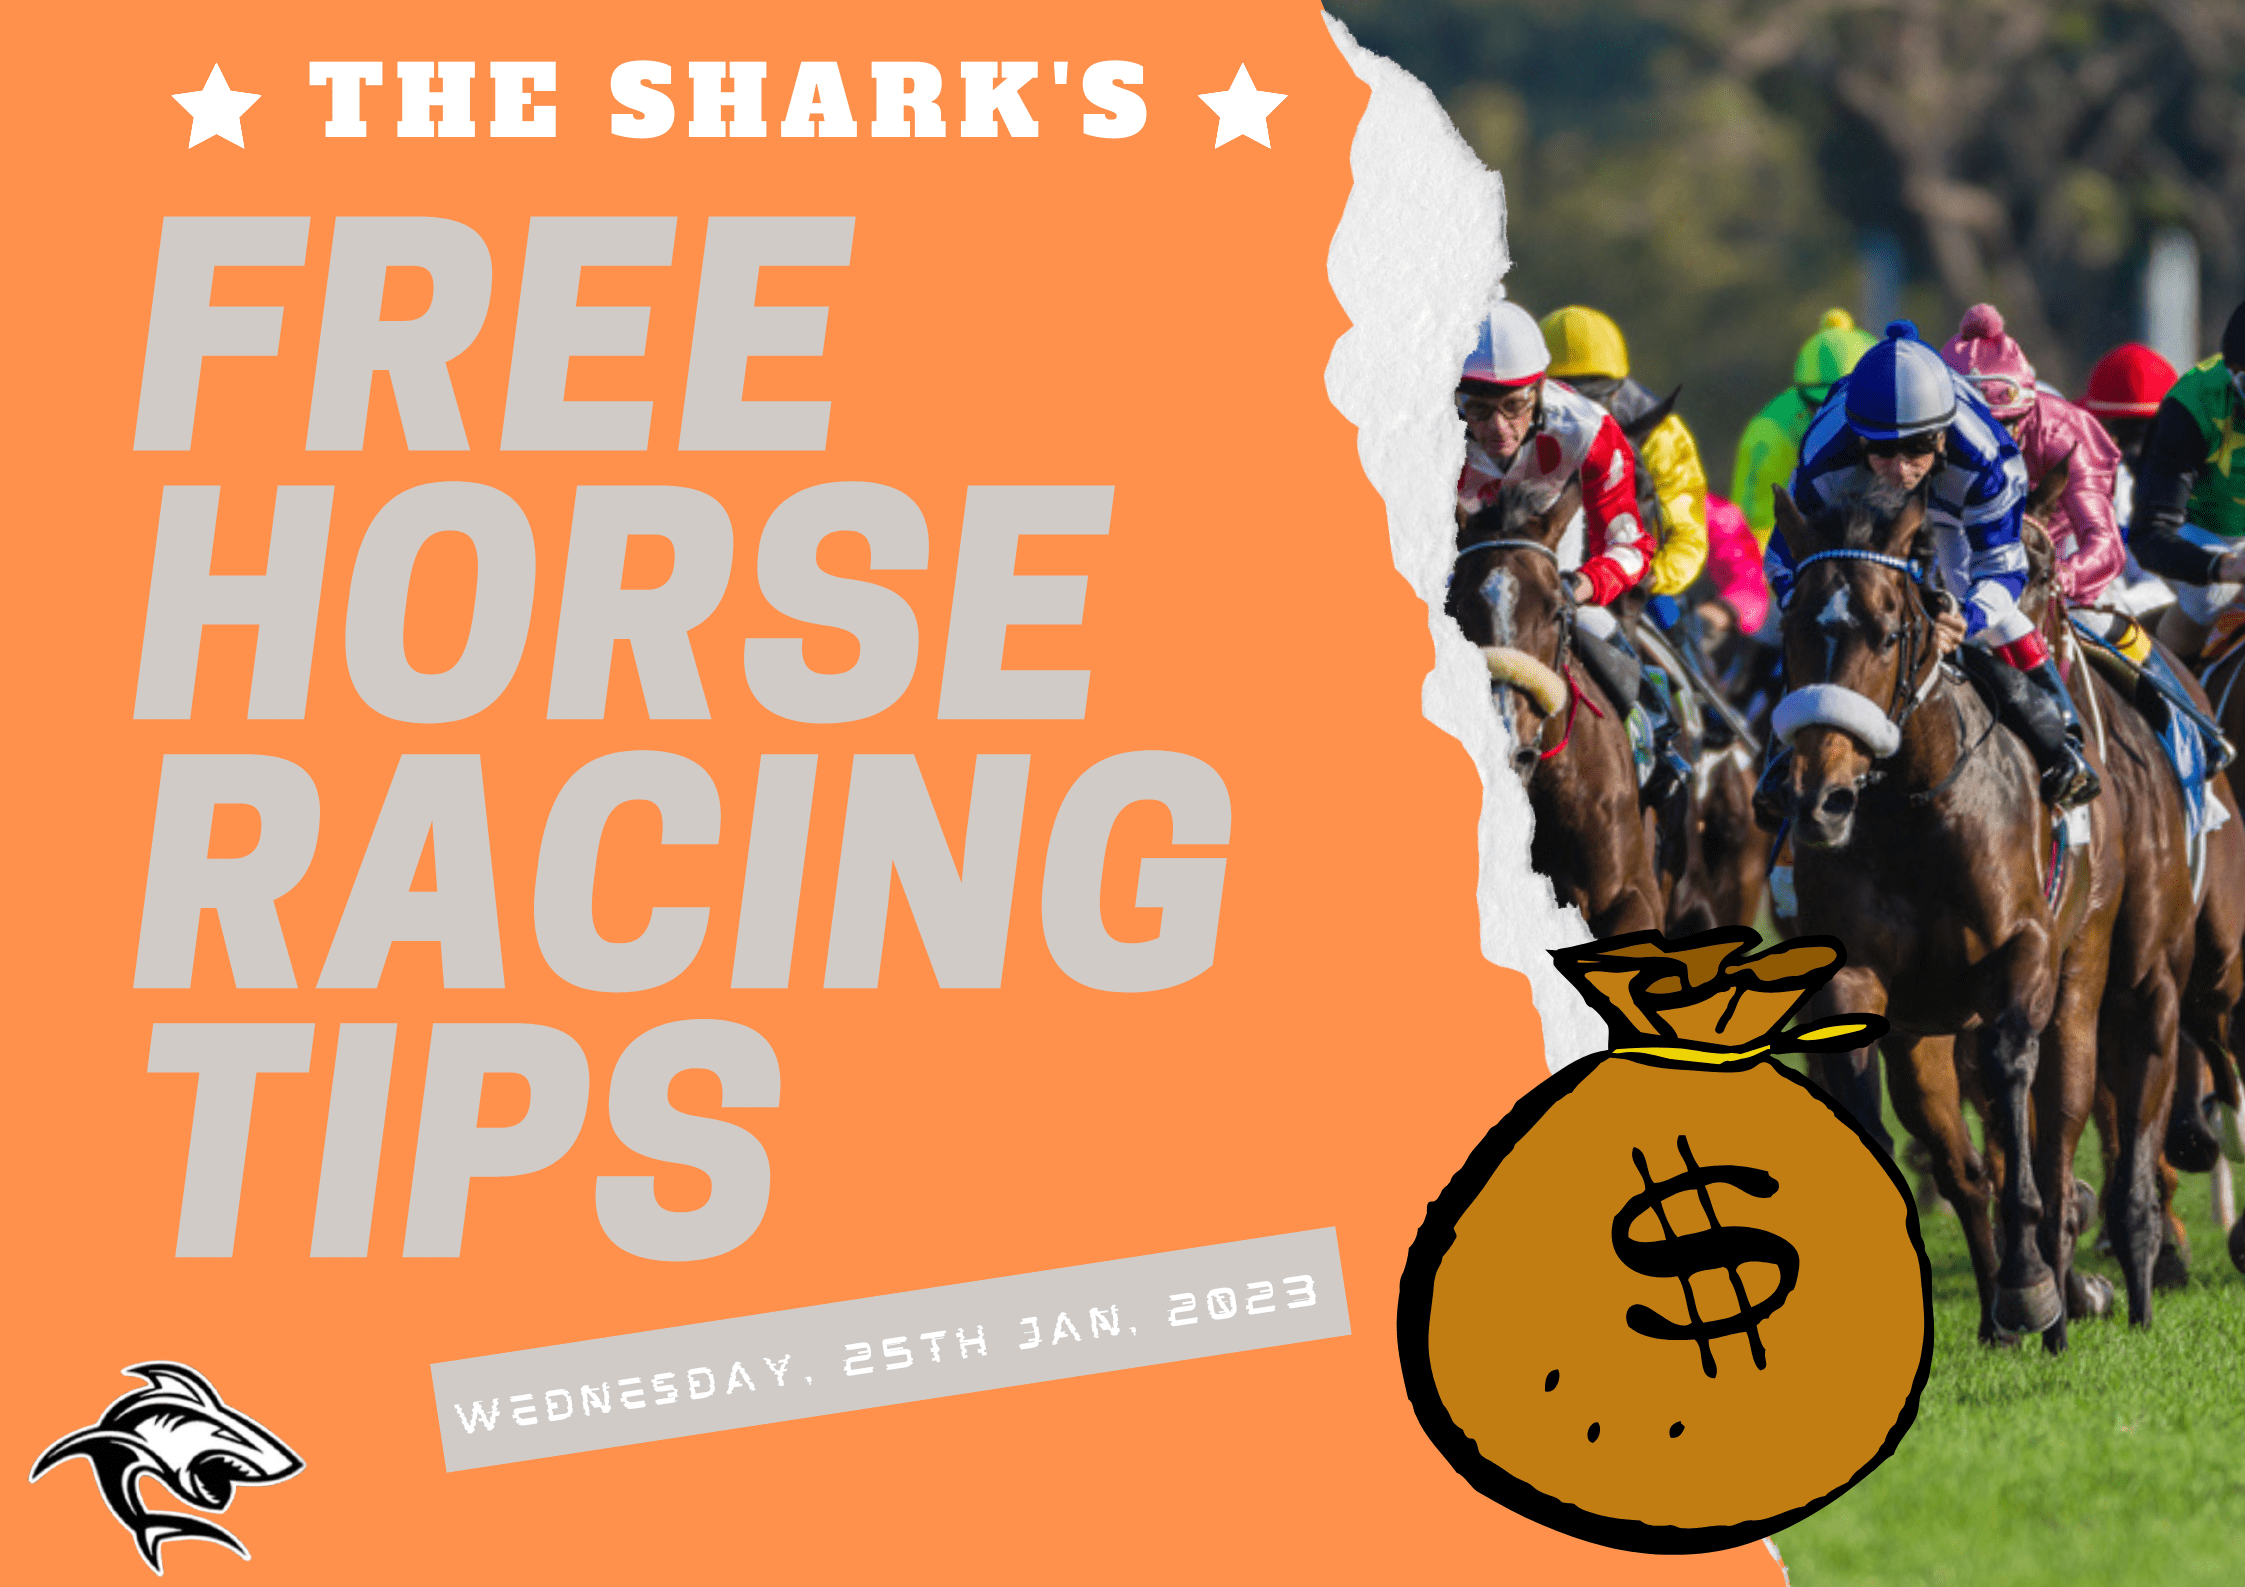 Free Horse Racing Tips - 25th Jan